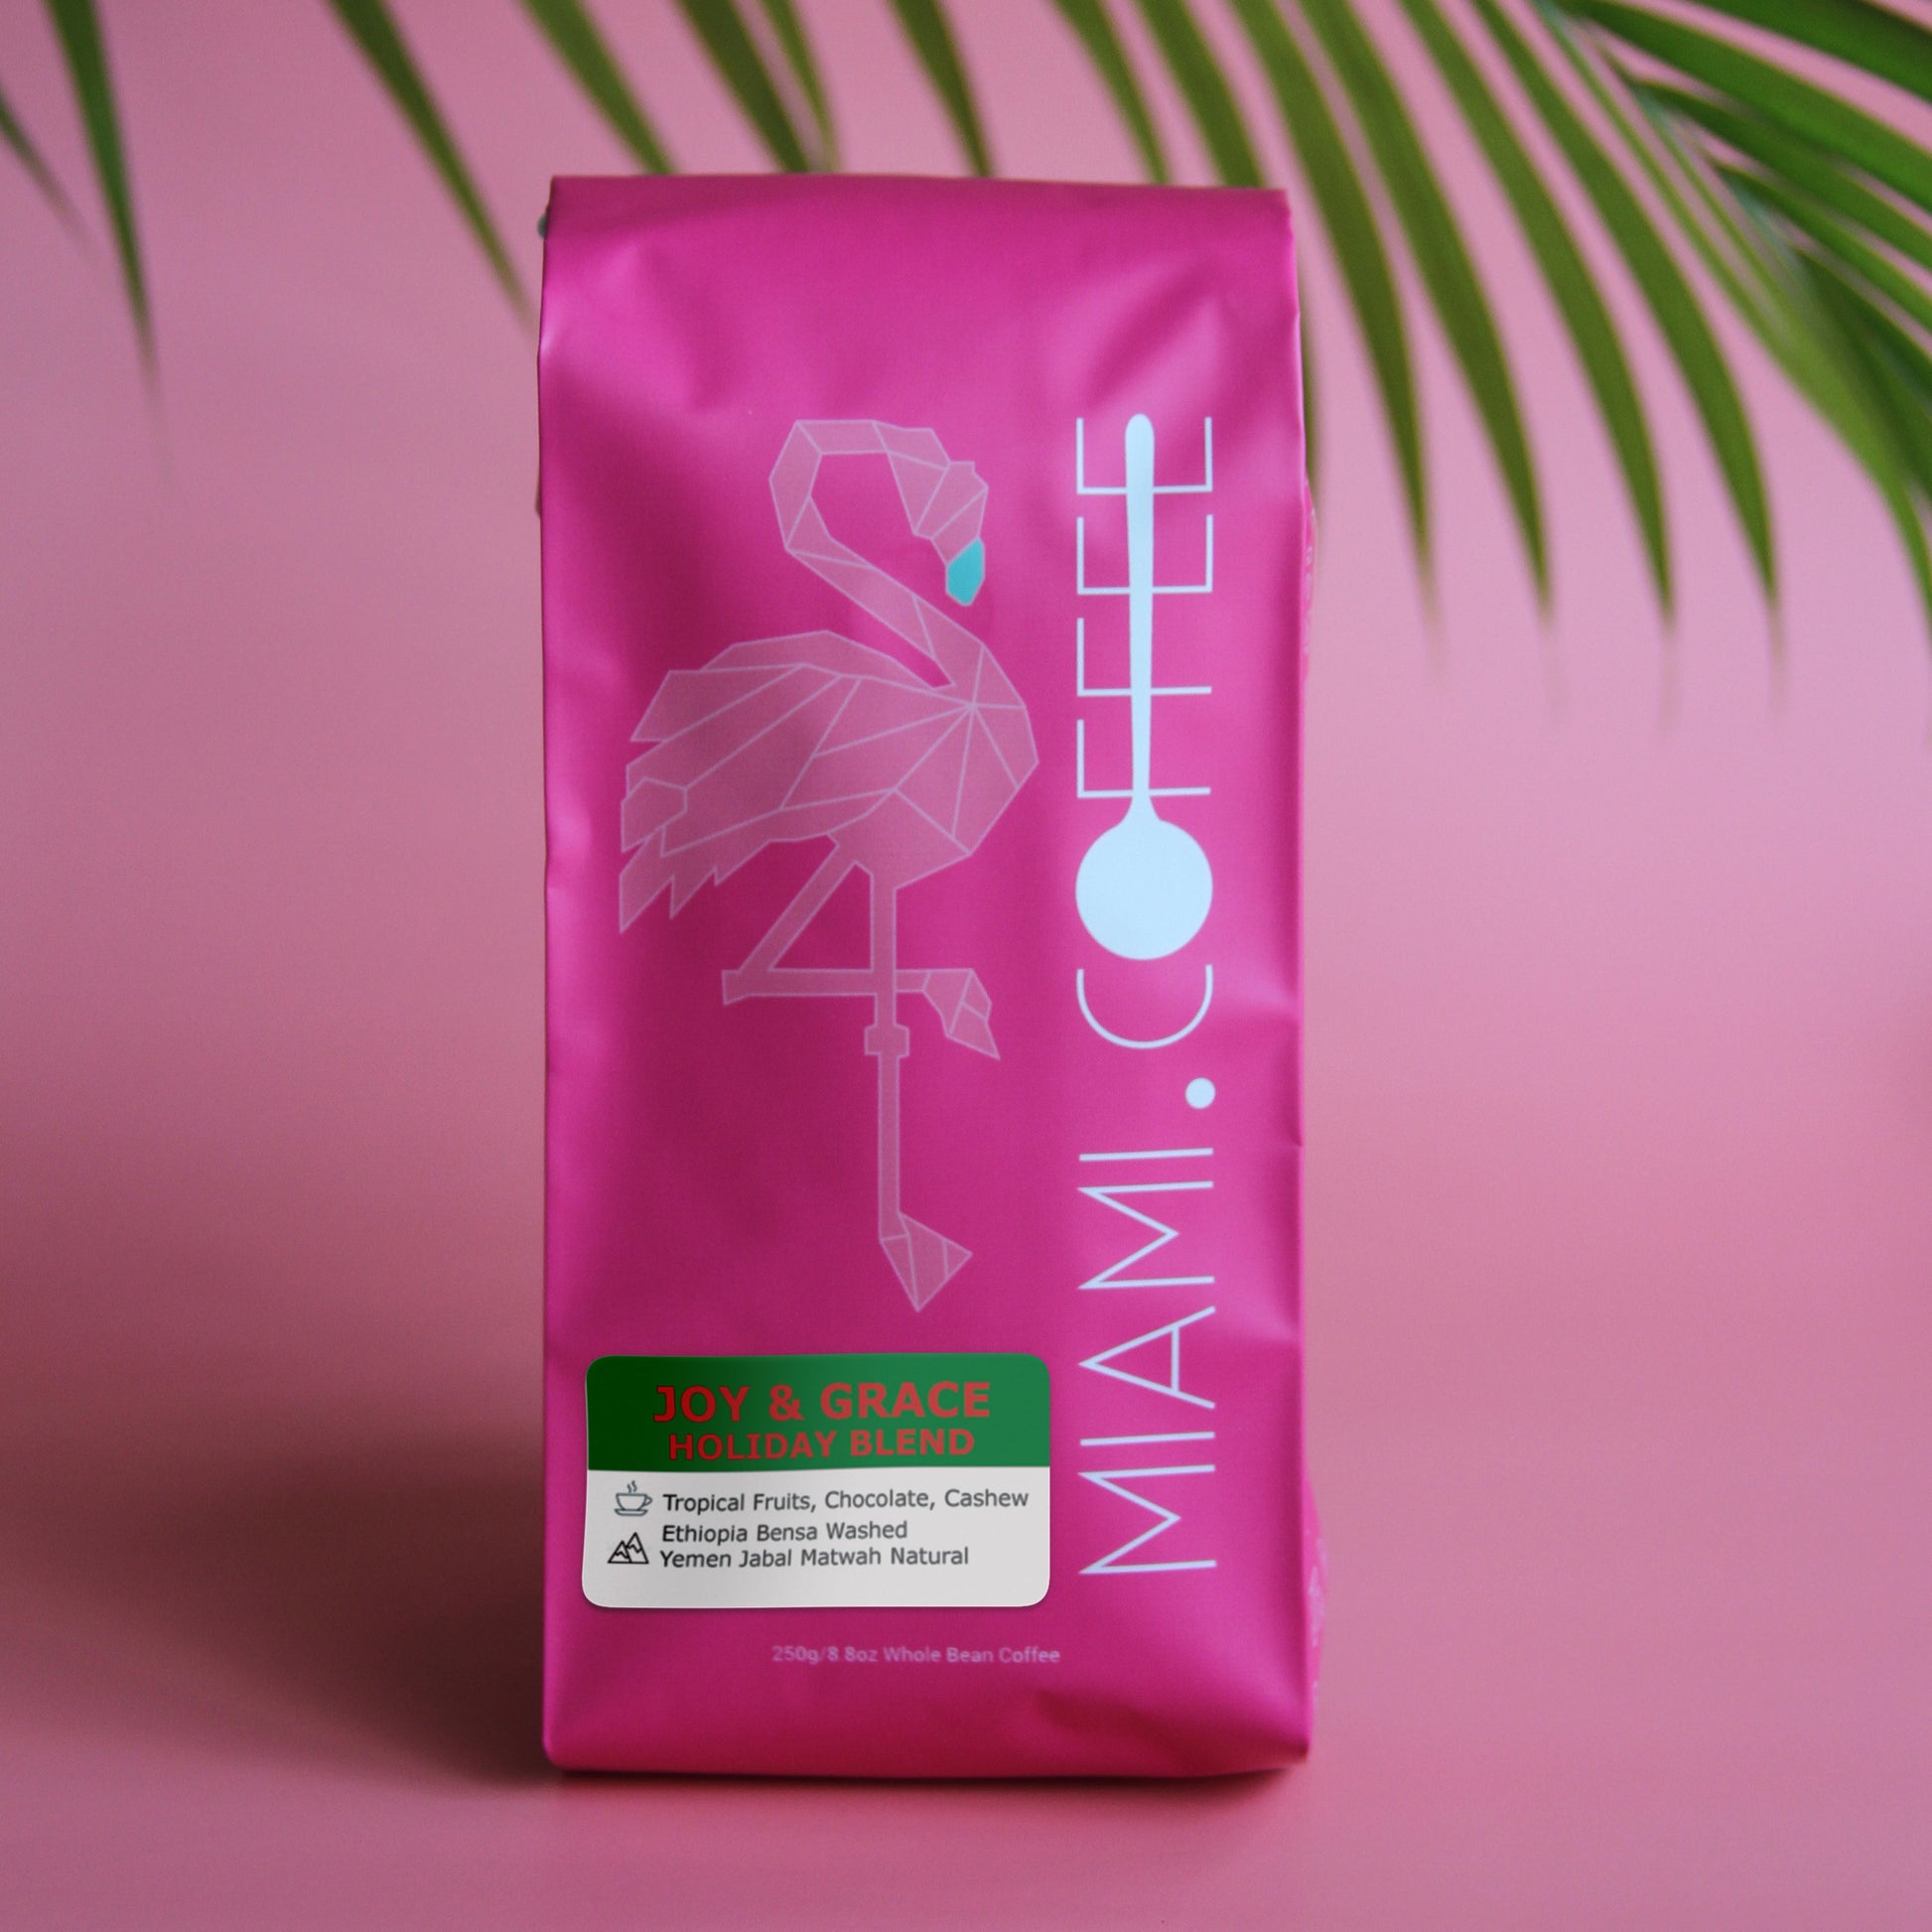 Joy & Grace Holiday Blend 9oz bag by Miami (dot) Coffee. Flavor descriptors: Tropical Fruits, Chocolate, Cashew